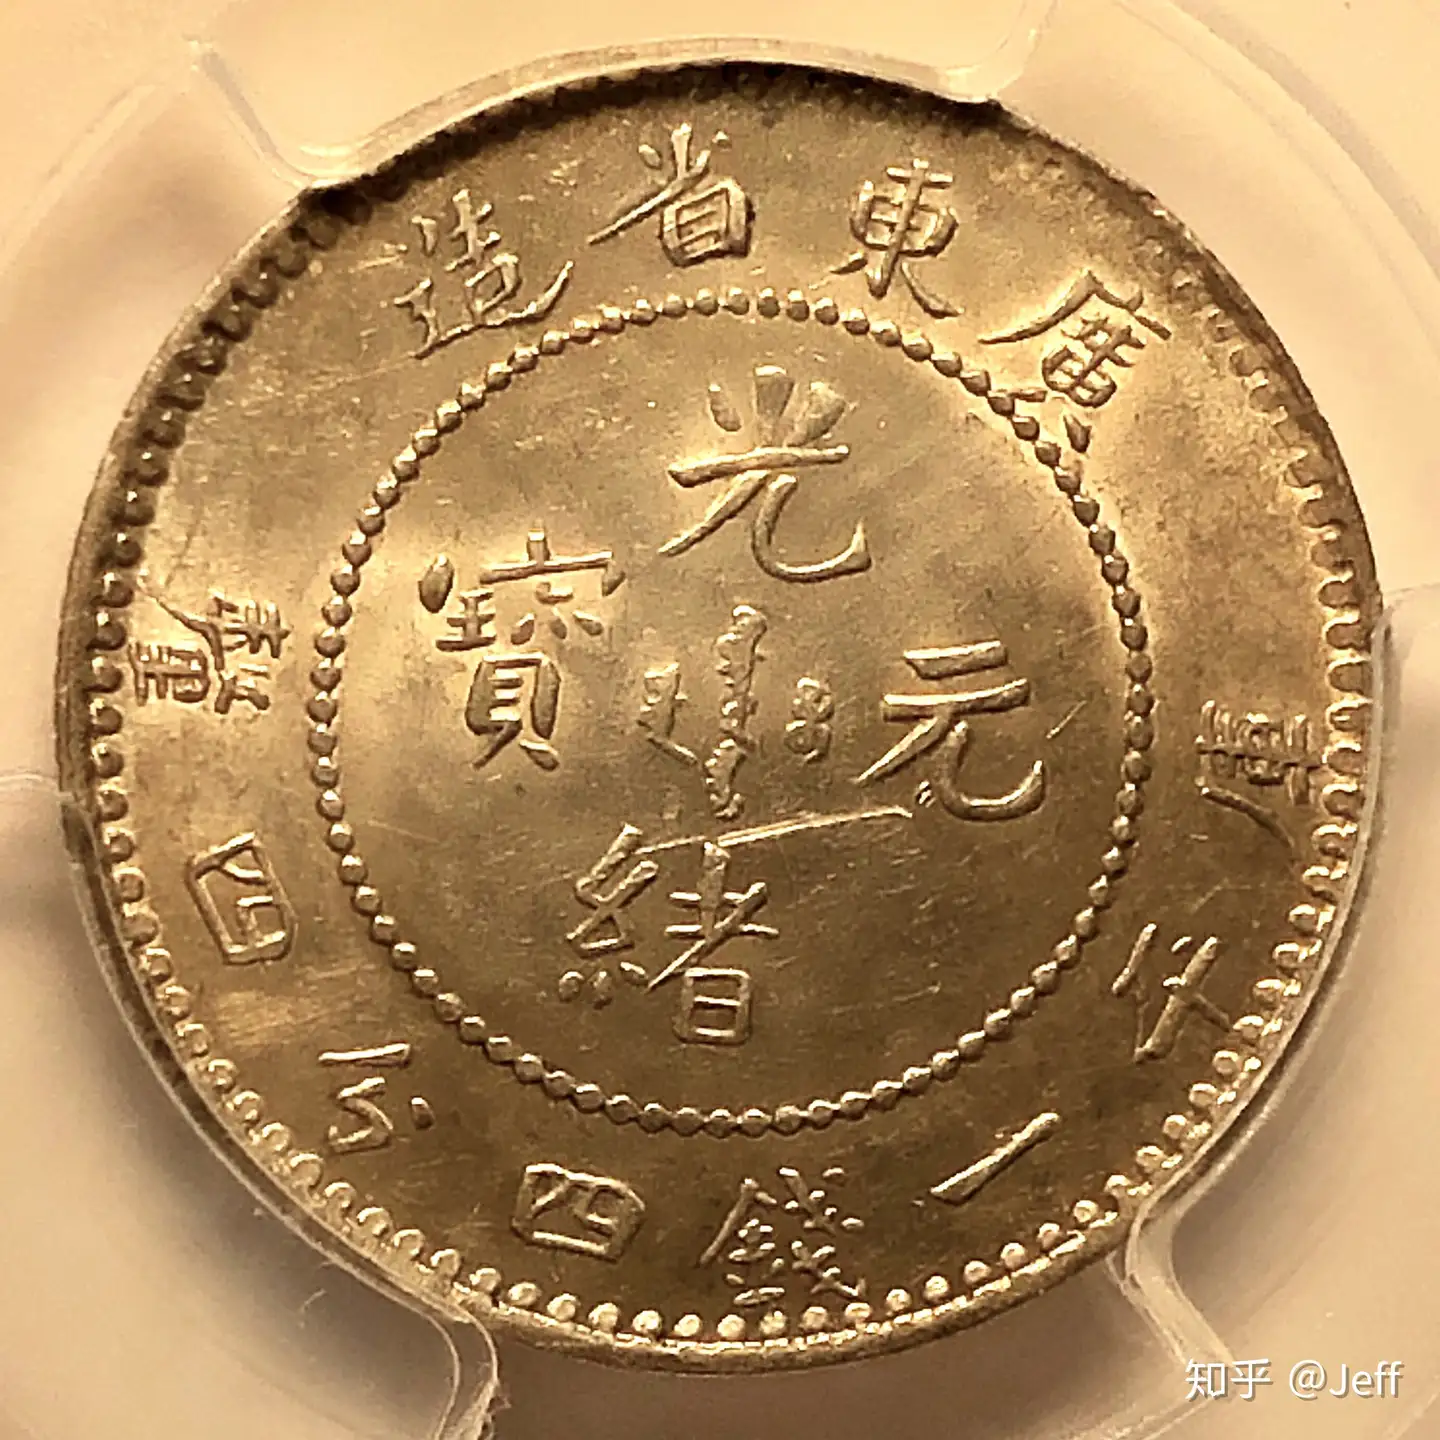 SALE／10%OFF 2209.広東省造 竜 龍 ドラゴン 古銭 硬貨 メダル kead.al